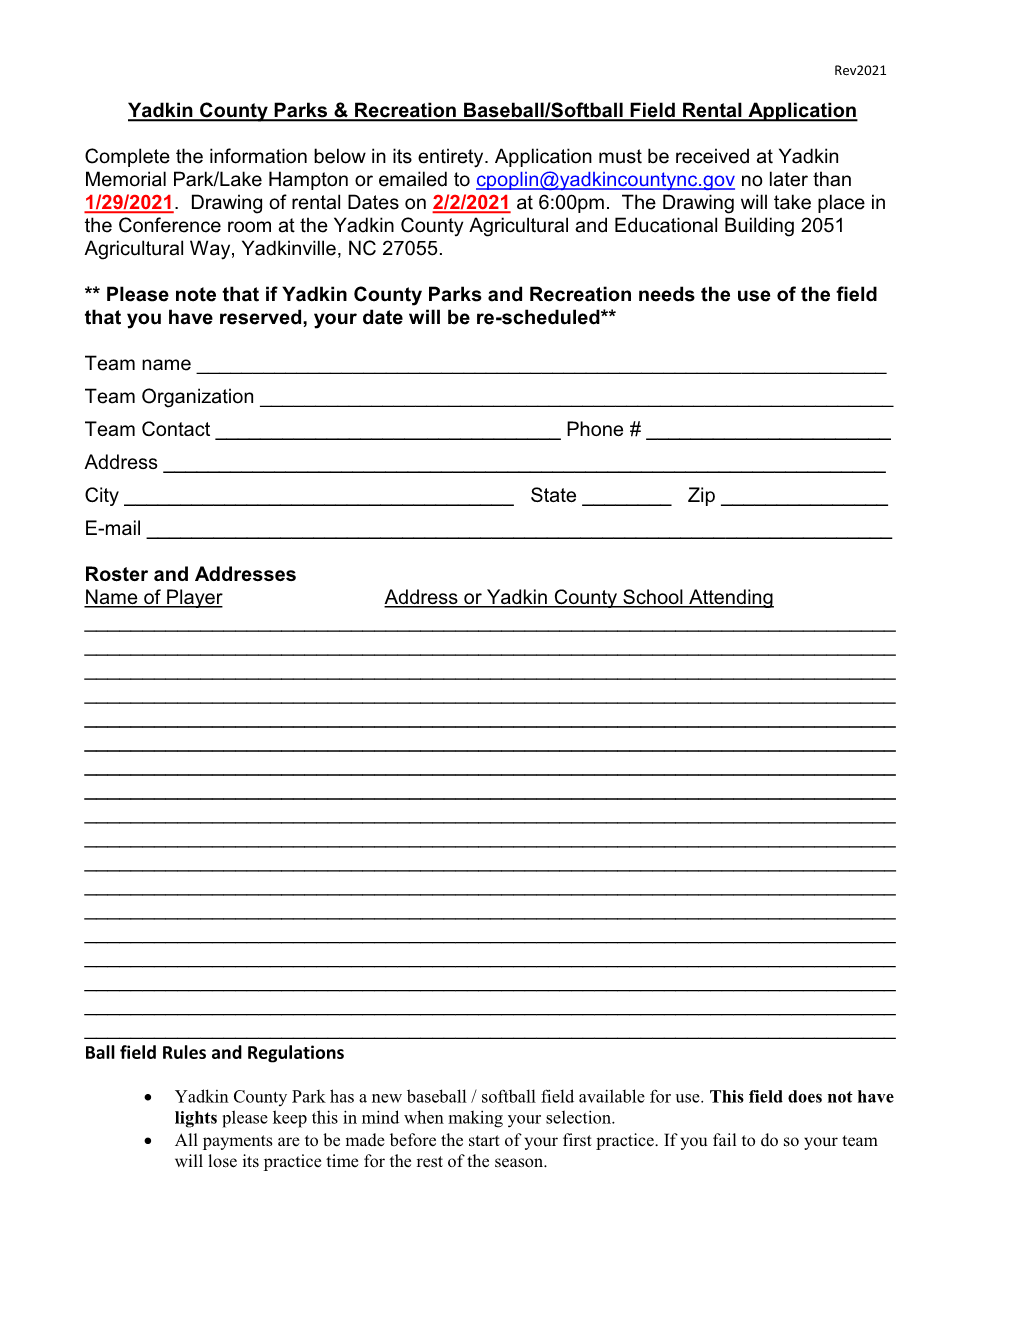 Yadkin County Parks & Recreation Baseball/Softball Field Rental